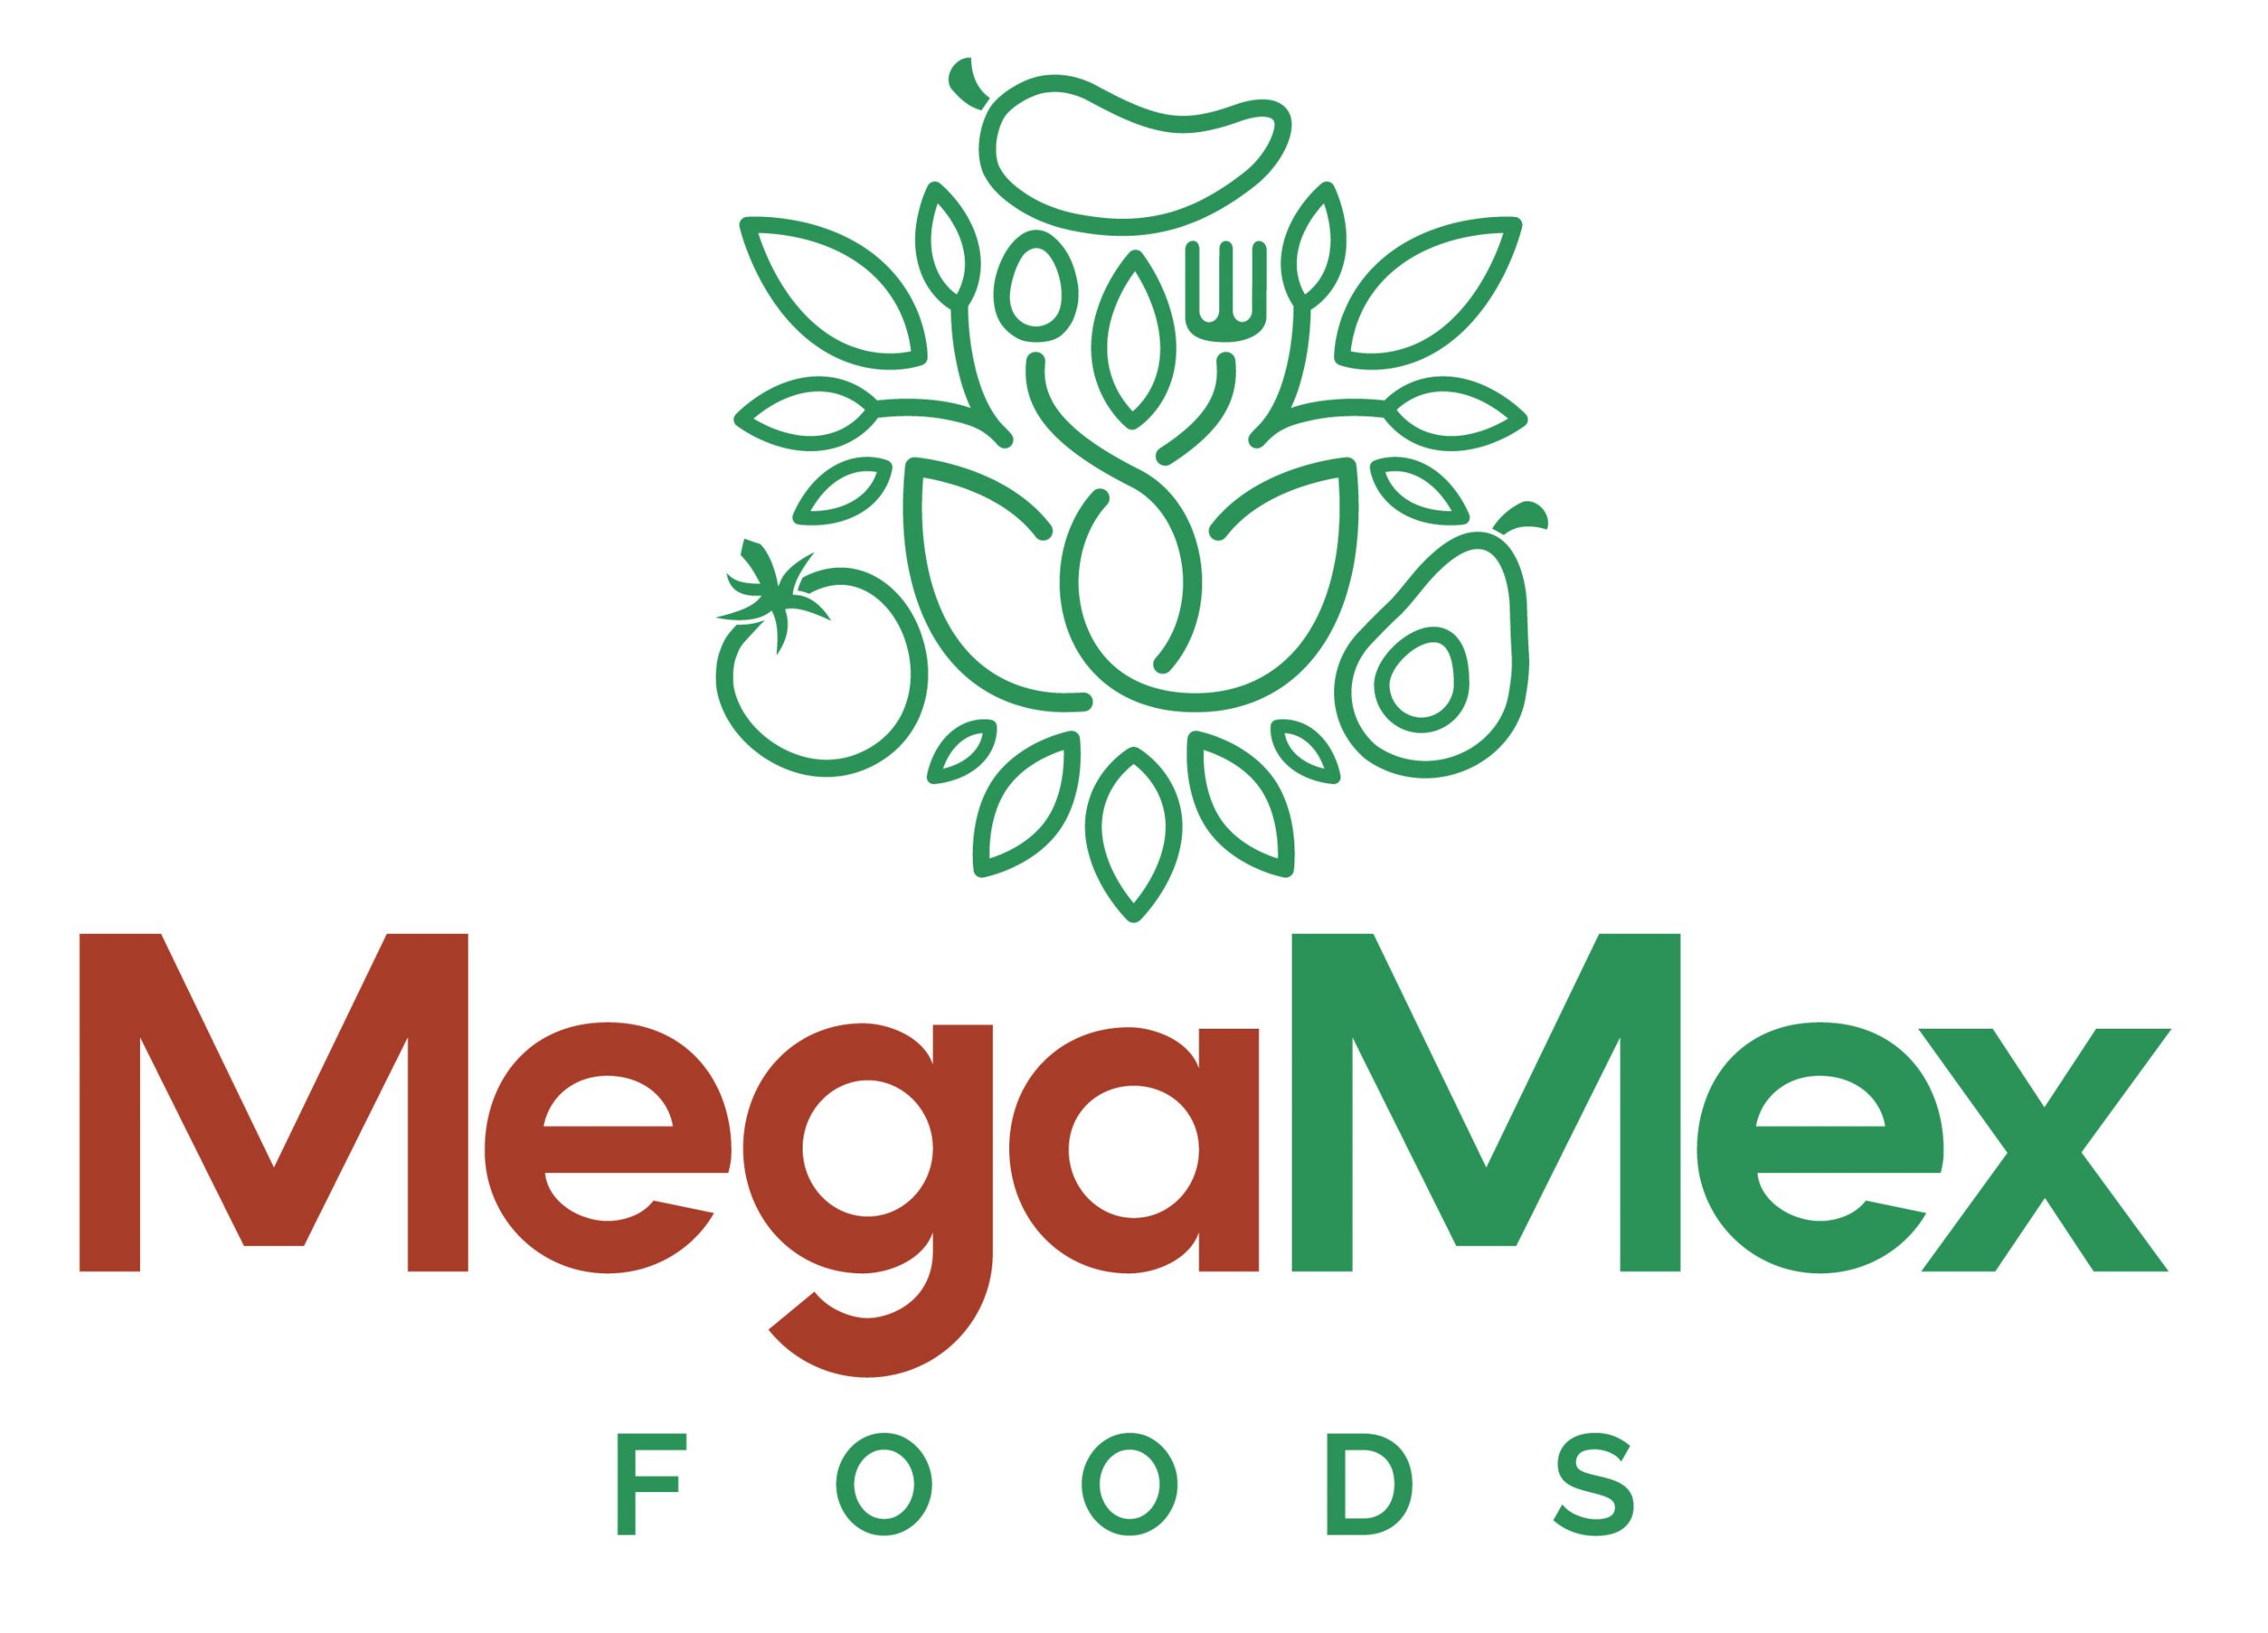 Megamex foods logo